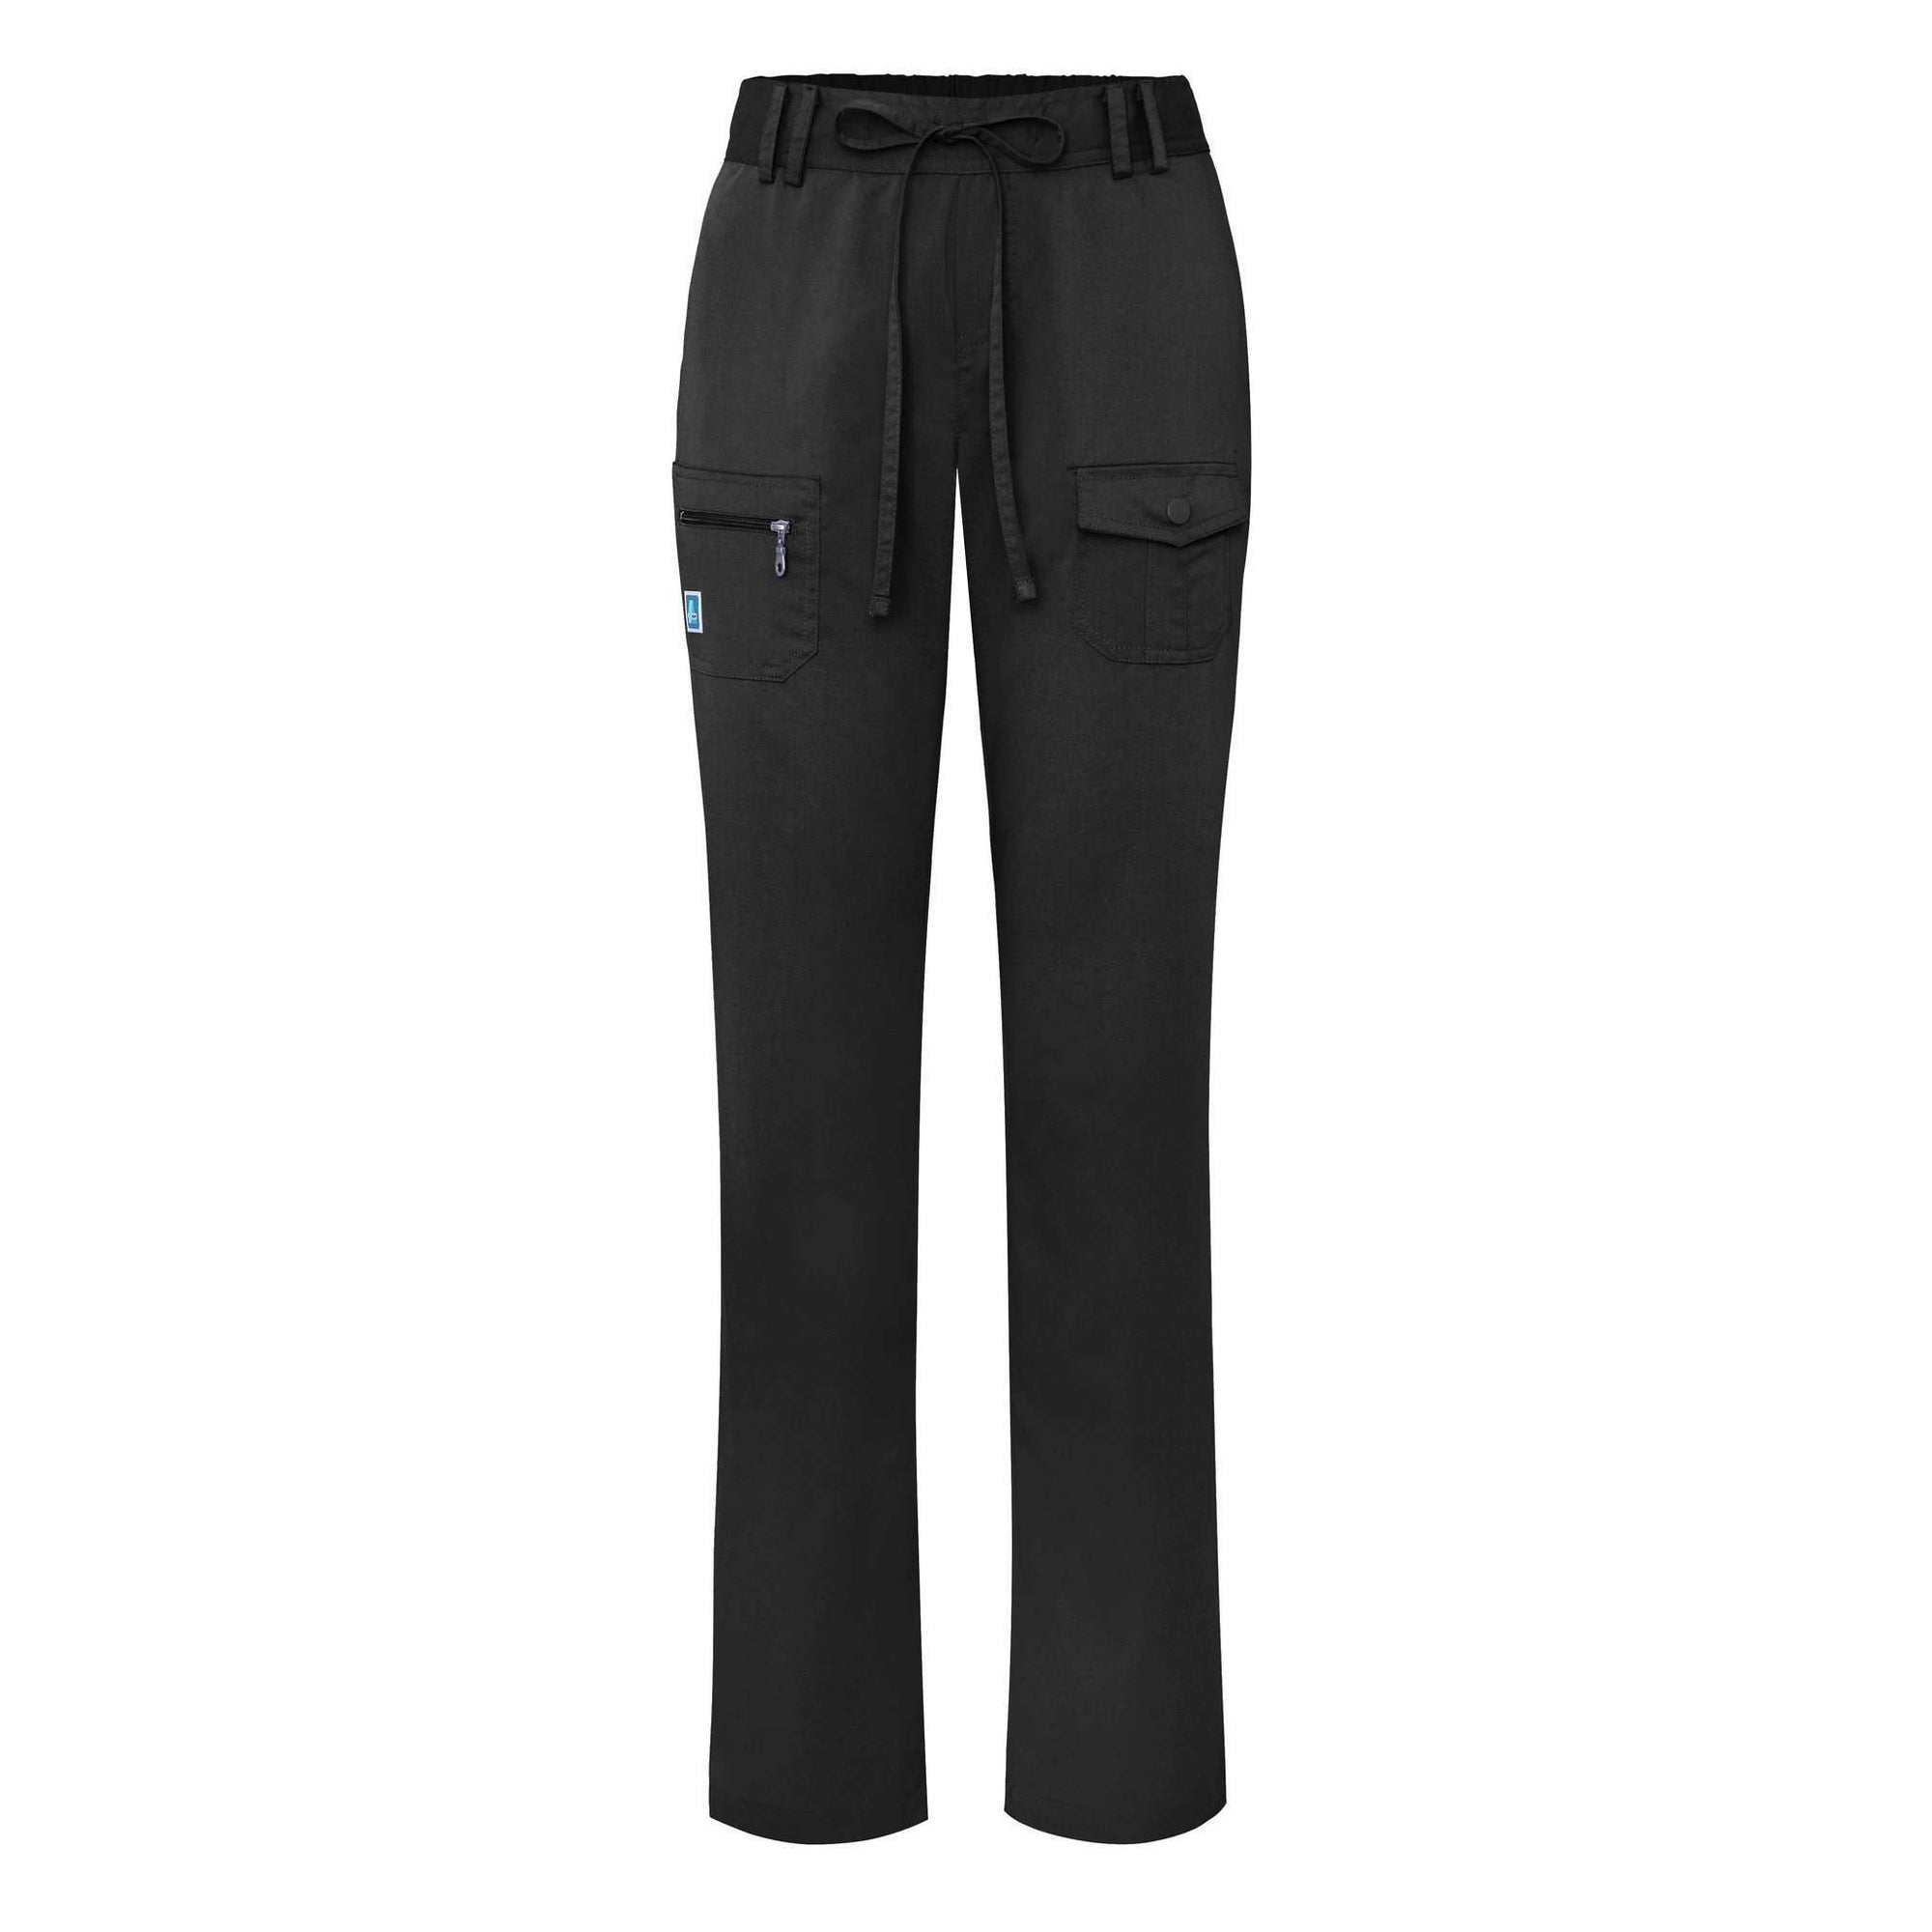  Adar - uniforms Medical Uniform Pants uniforms online Adar Indulgence Jr. Fit Low Rise Tapered Leg 6 Pocket Drawstring Pants - SchoolUniforms.com